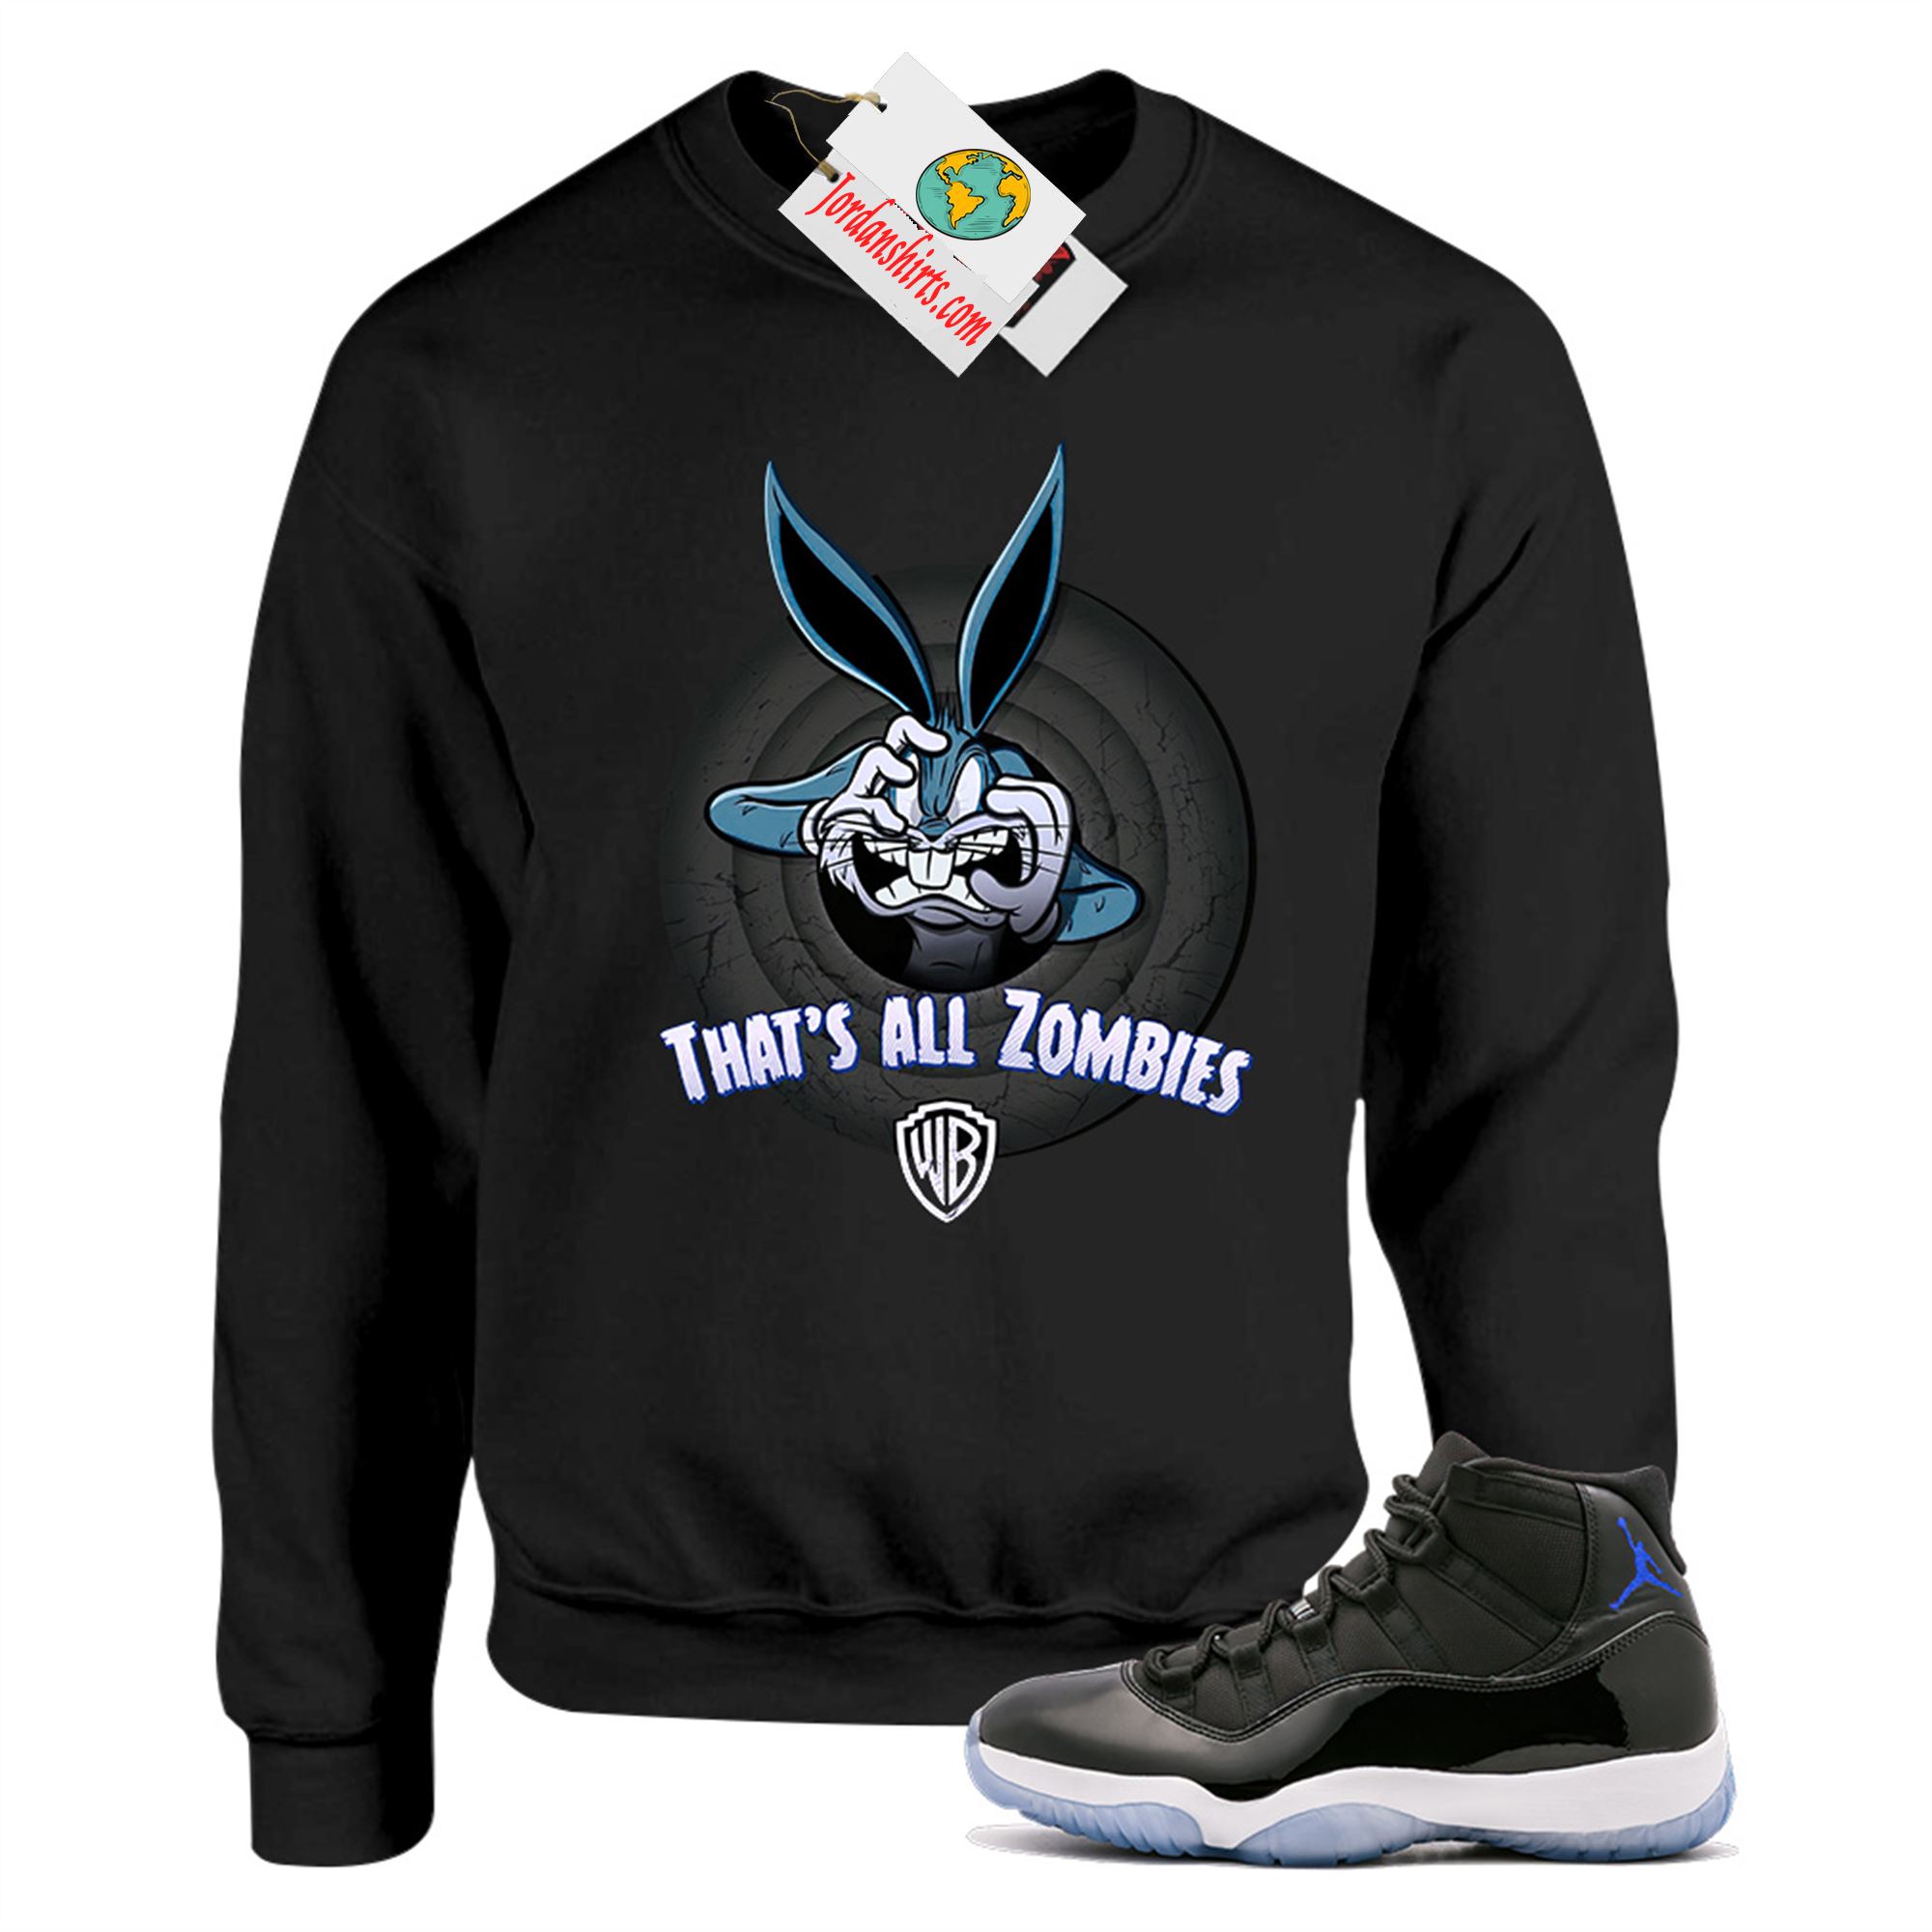 Jordan 11 Sweatshirt, Bugs Bunny Black Sweatshirt Air Jordan 11 Space Jam 11s Full Size Up To 5xl